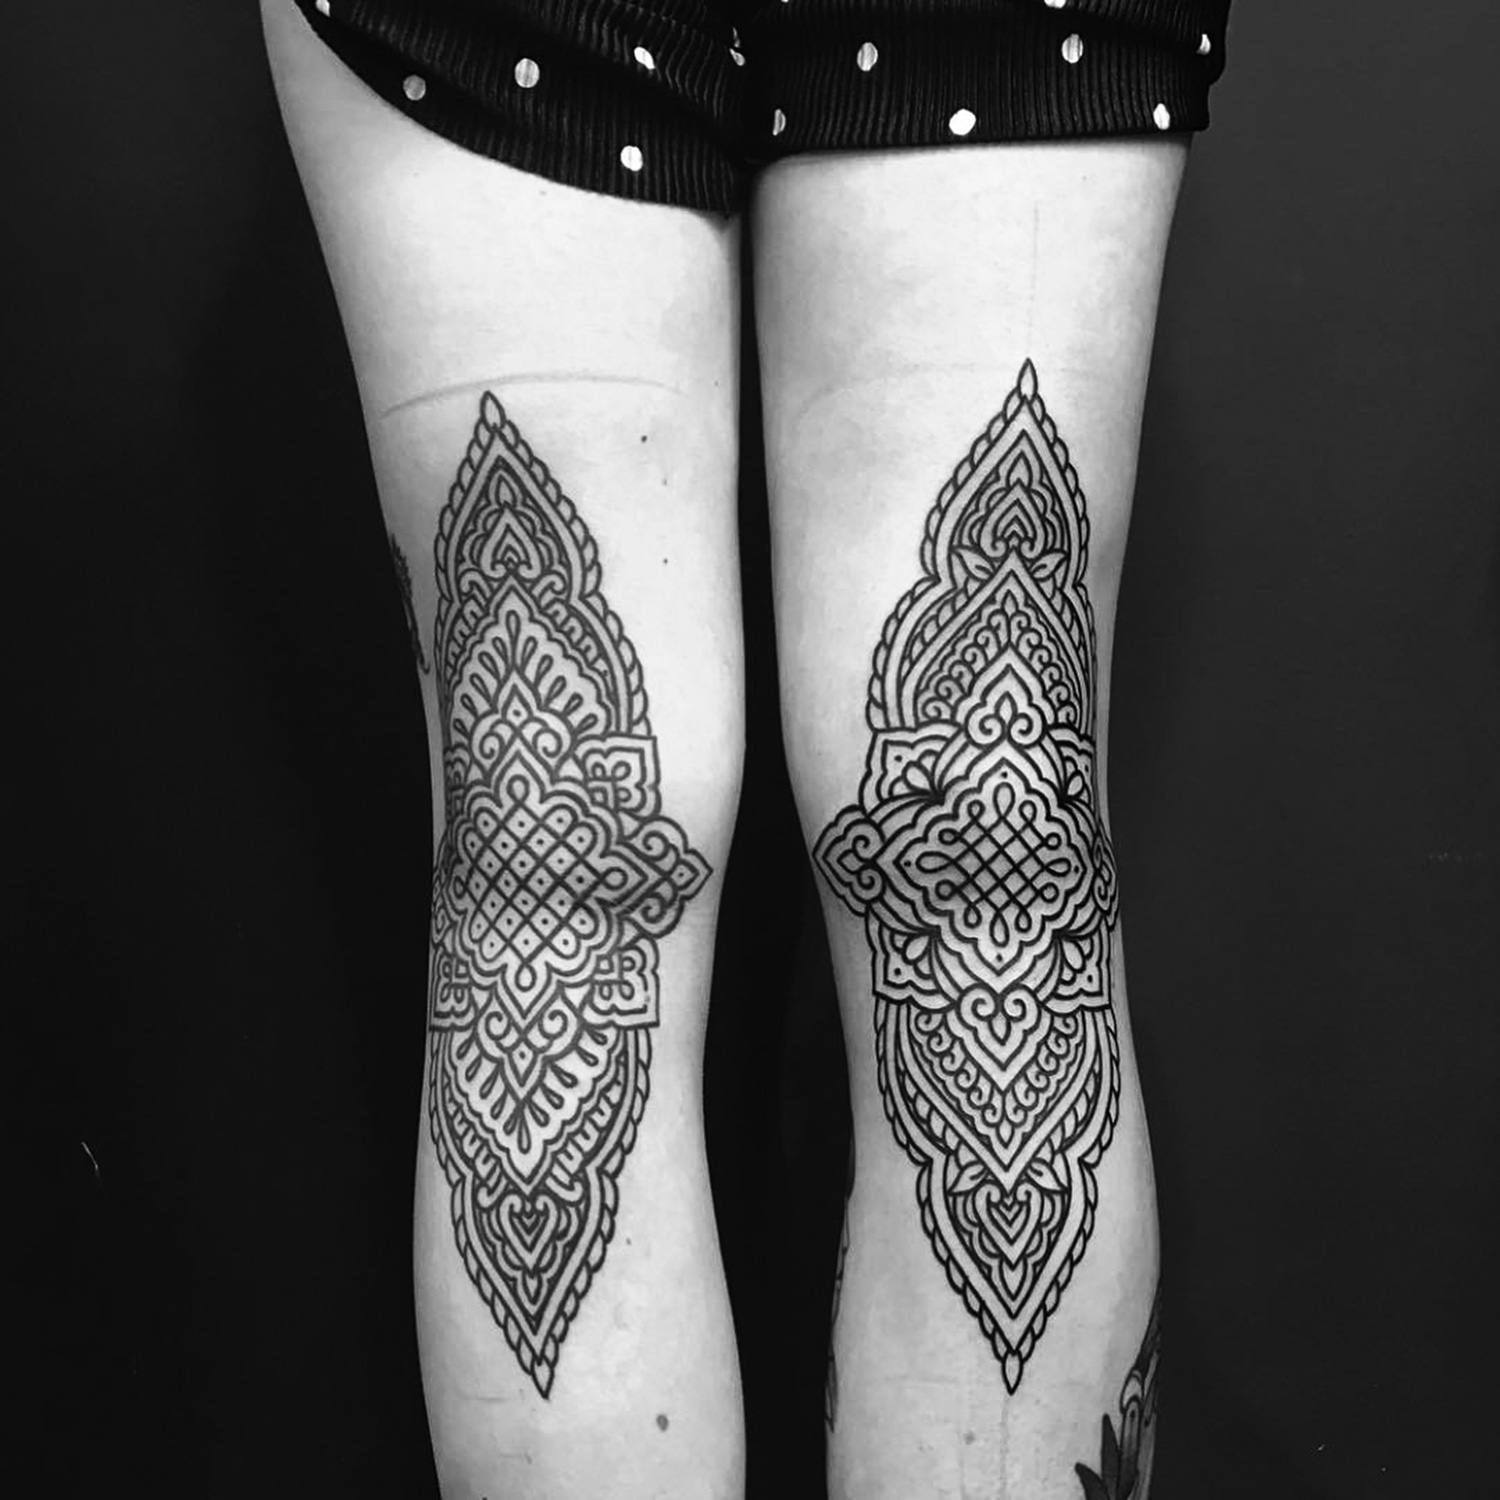 Ellemental Tattoos - back of knees ornamental tattoos